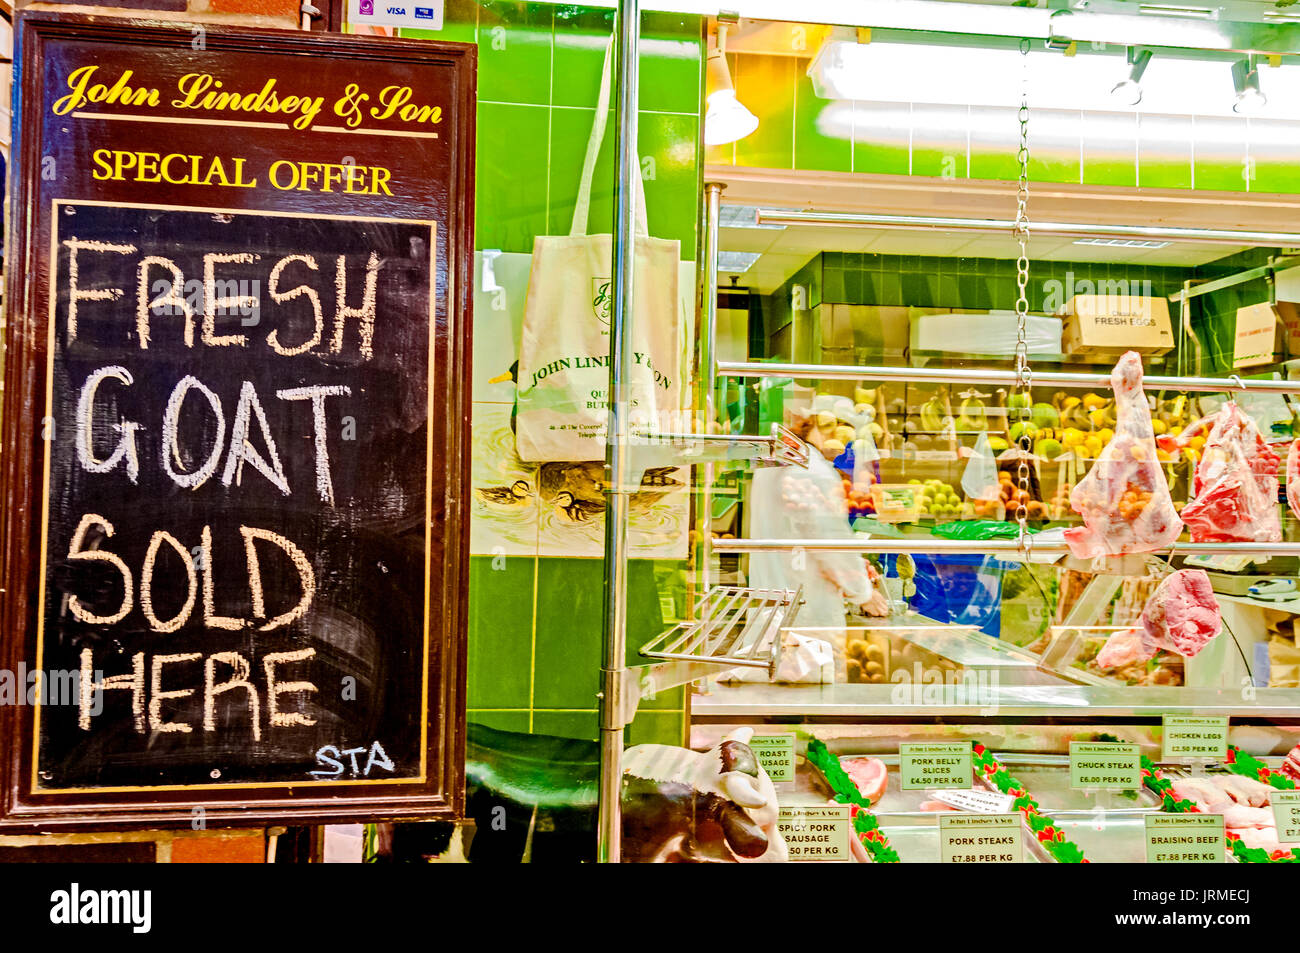 Cibo sul display in un mercato in stallo, mercato coperto, Oxford; Auslage eines Marktstandes mit Fleisch in Oxford Foto Stock